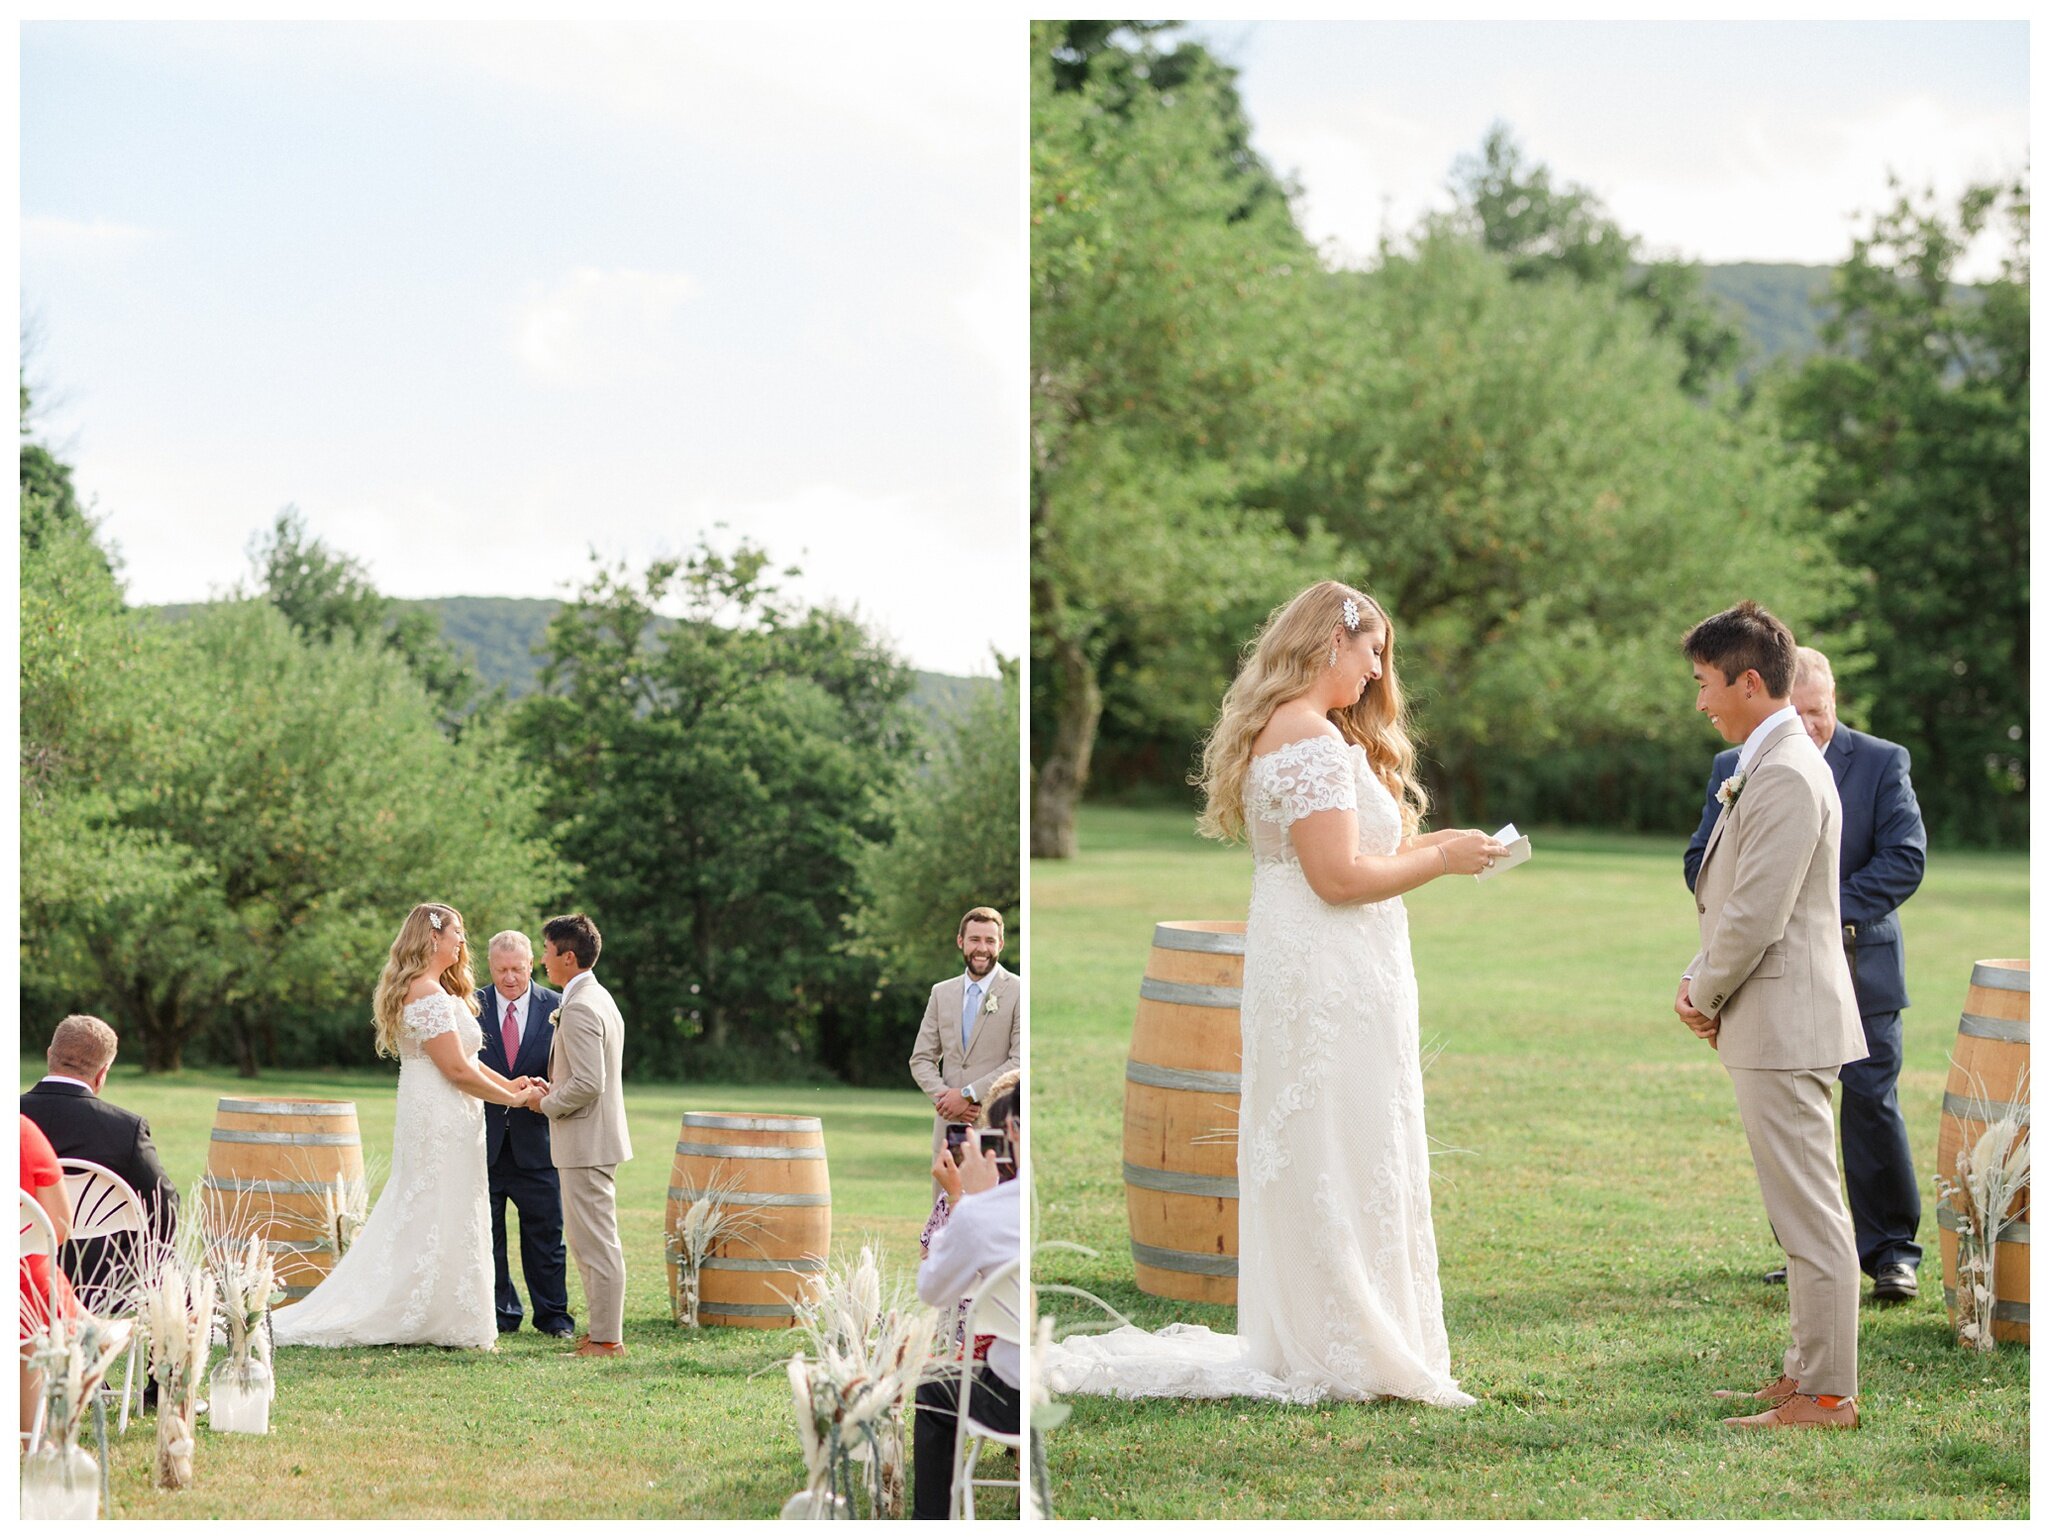 Maiolatesi's Winery Summer Wedding Photos_0021.jpg